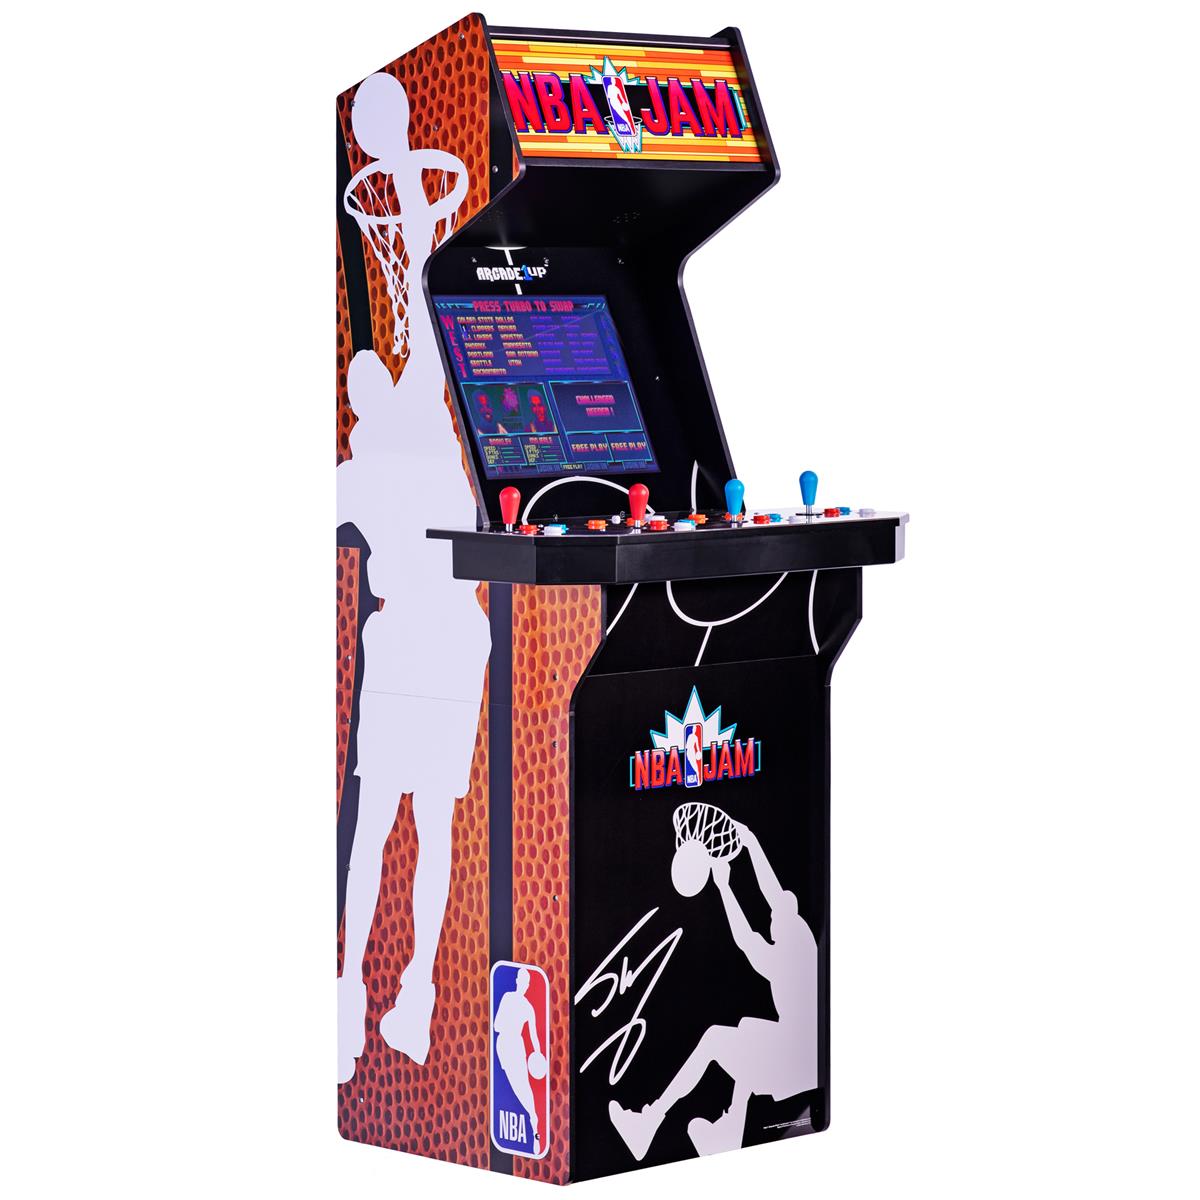 Arcade1Up NBA JAM: SHAQ EDITION Arcade Game Machine - New